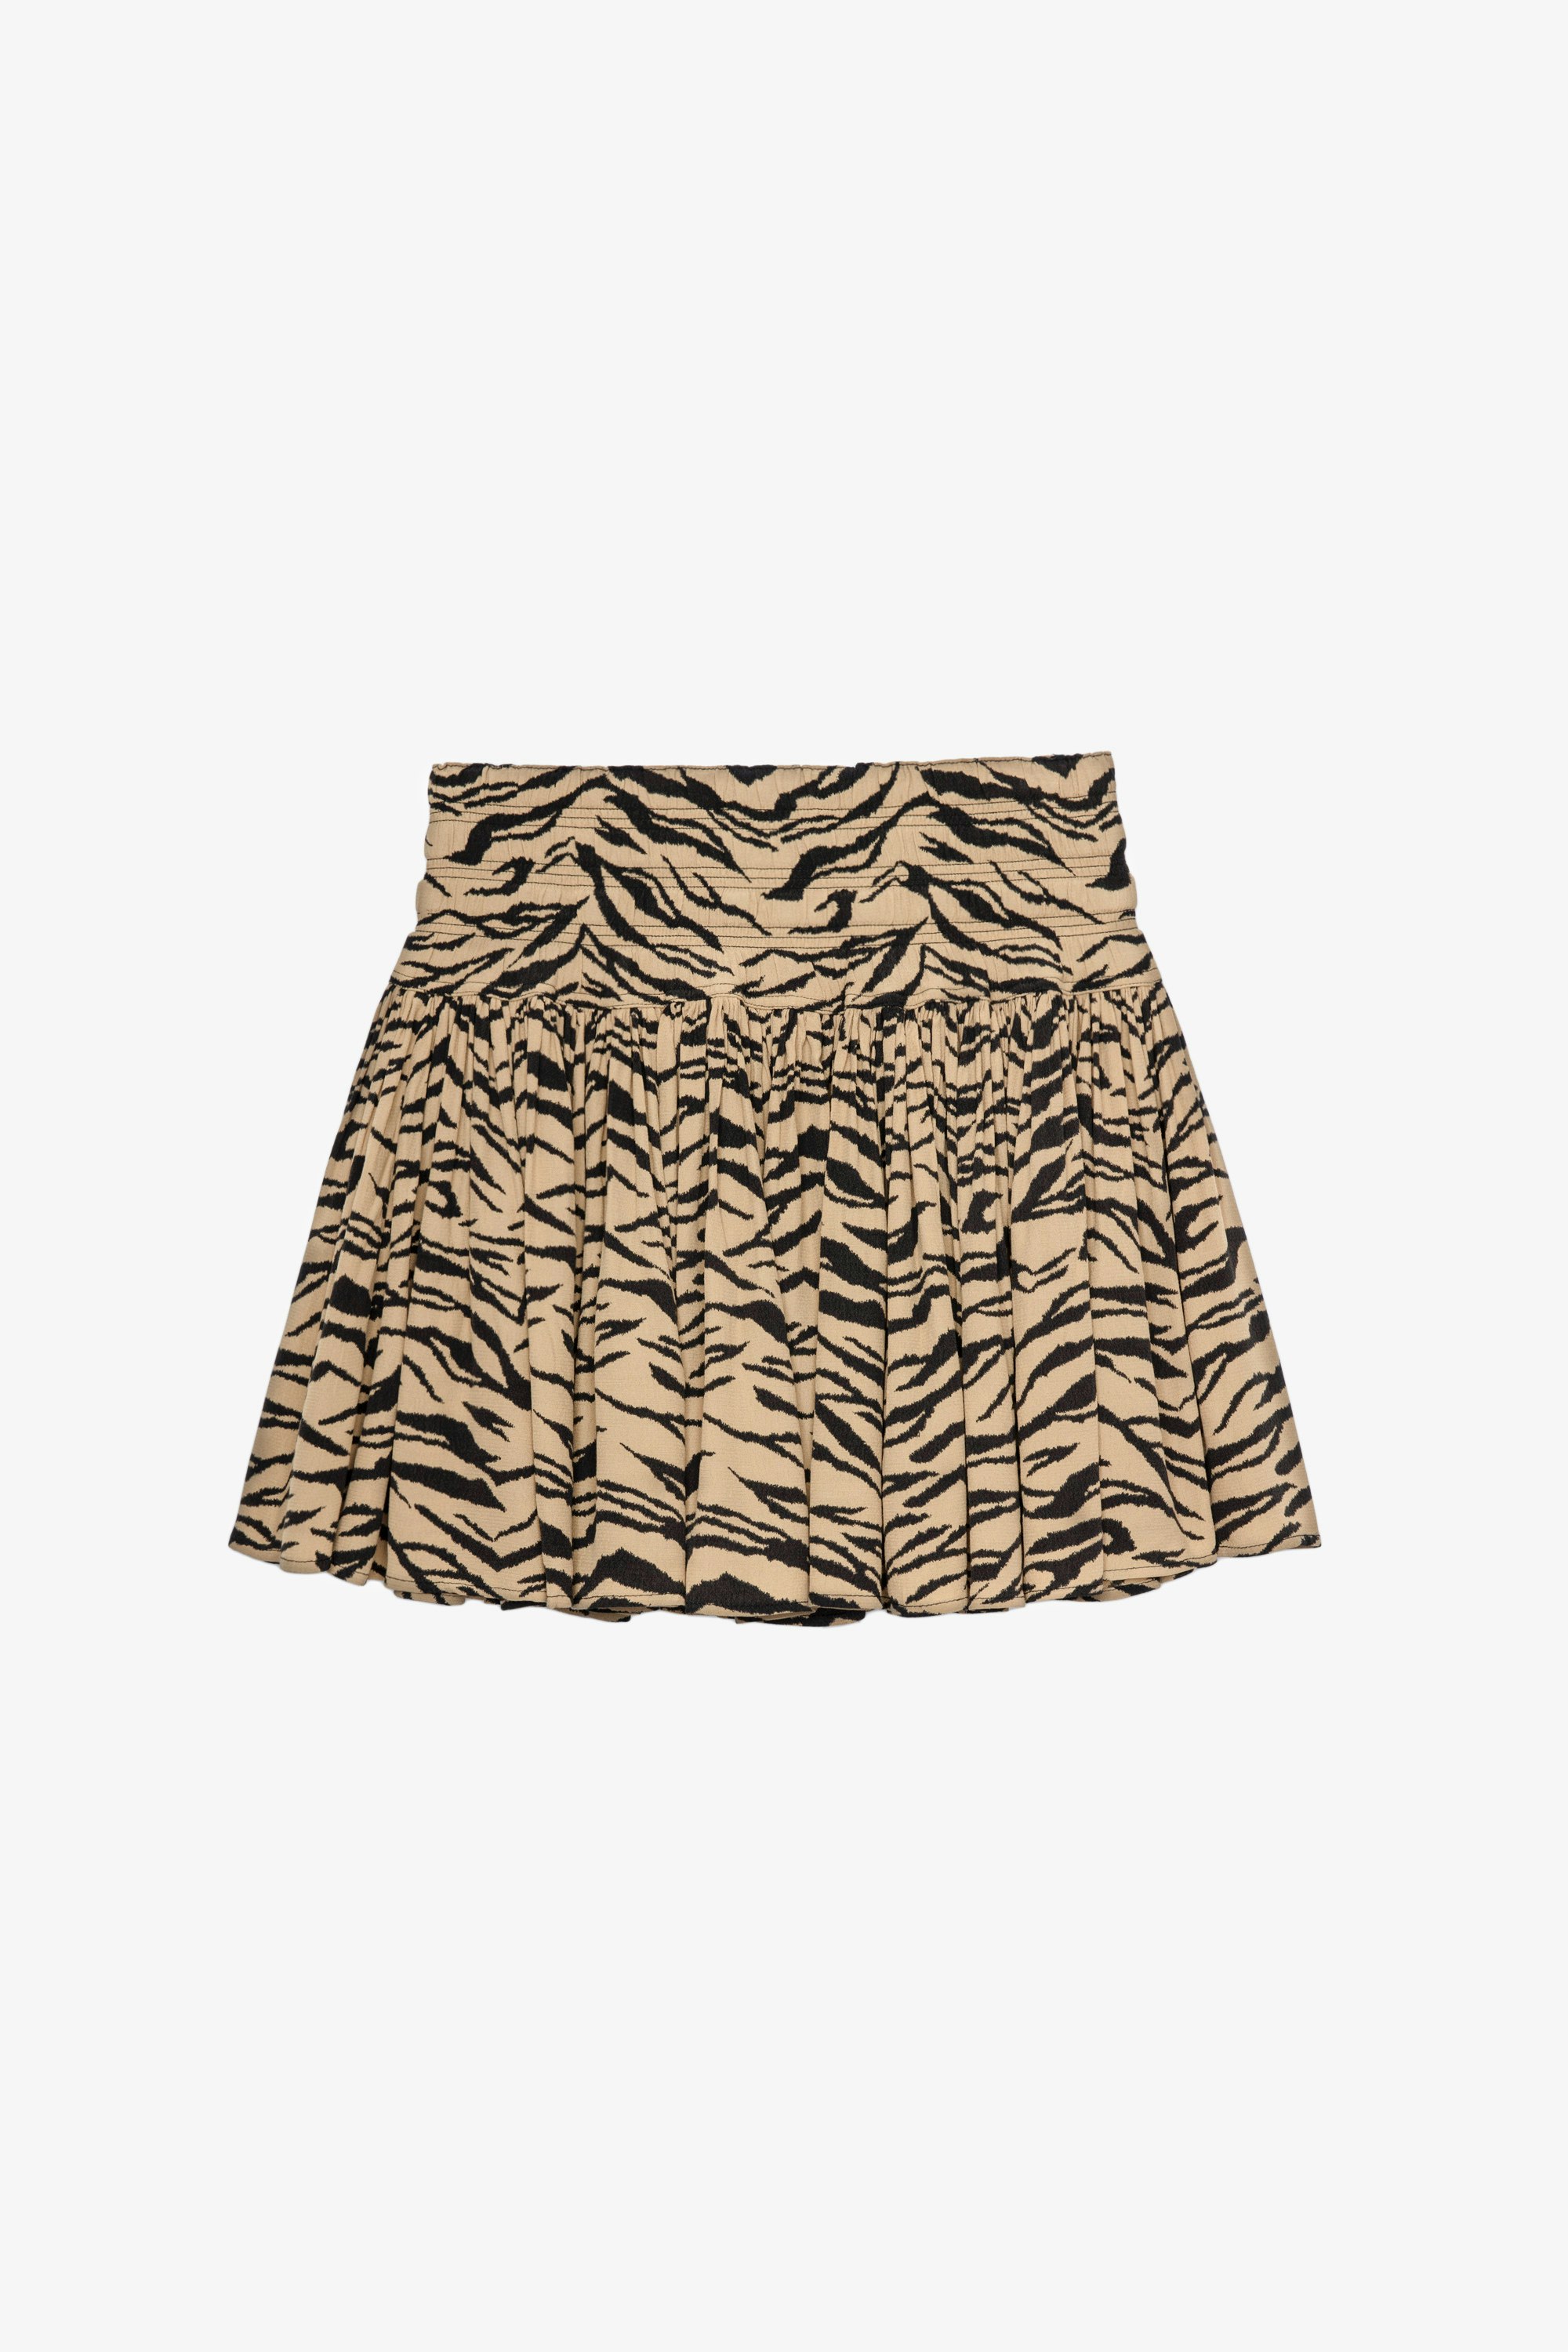 Jocky Tiger Skirt Women’s Naturel draped mini skirt with tiger print 